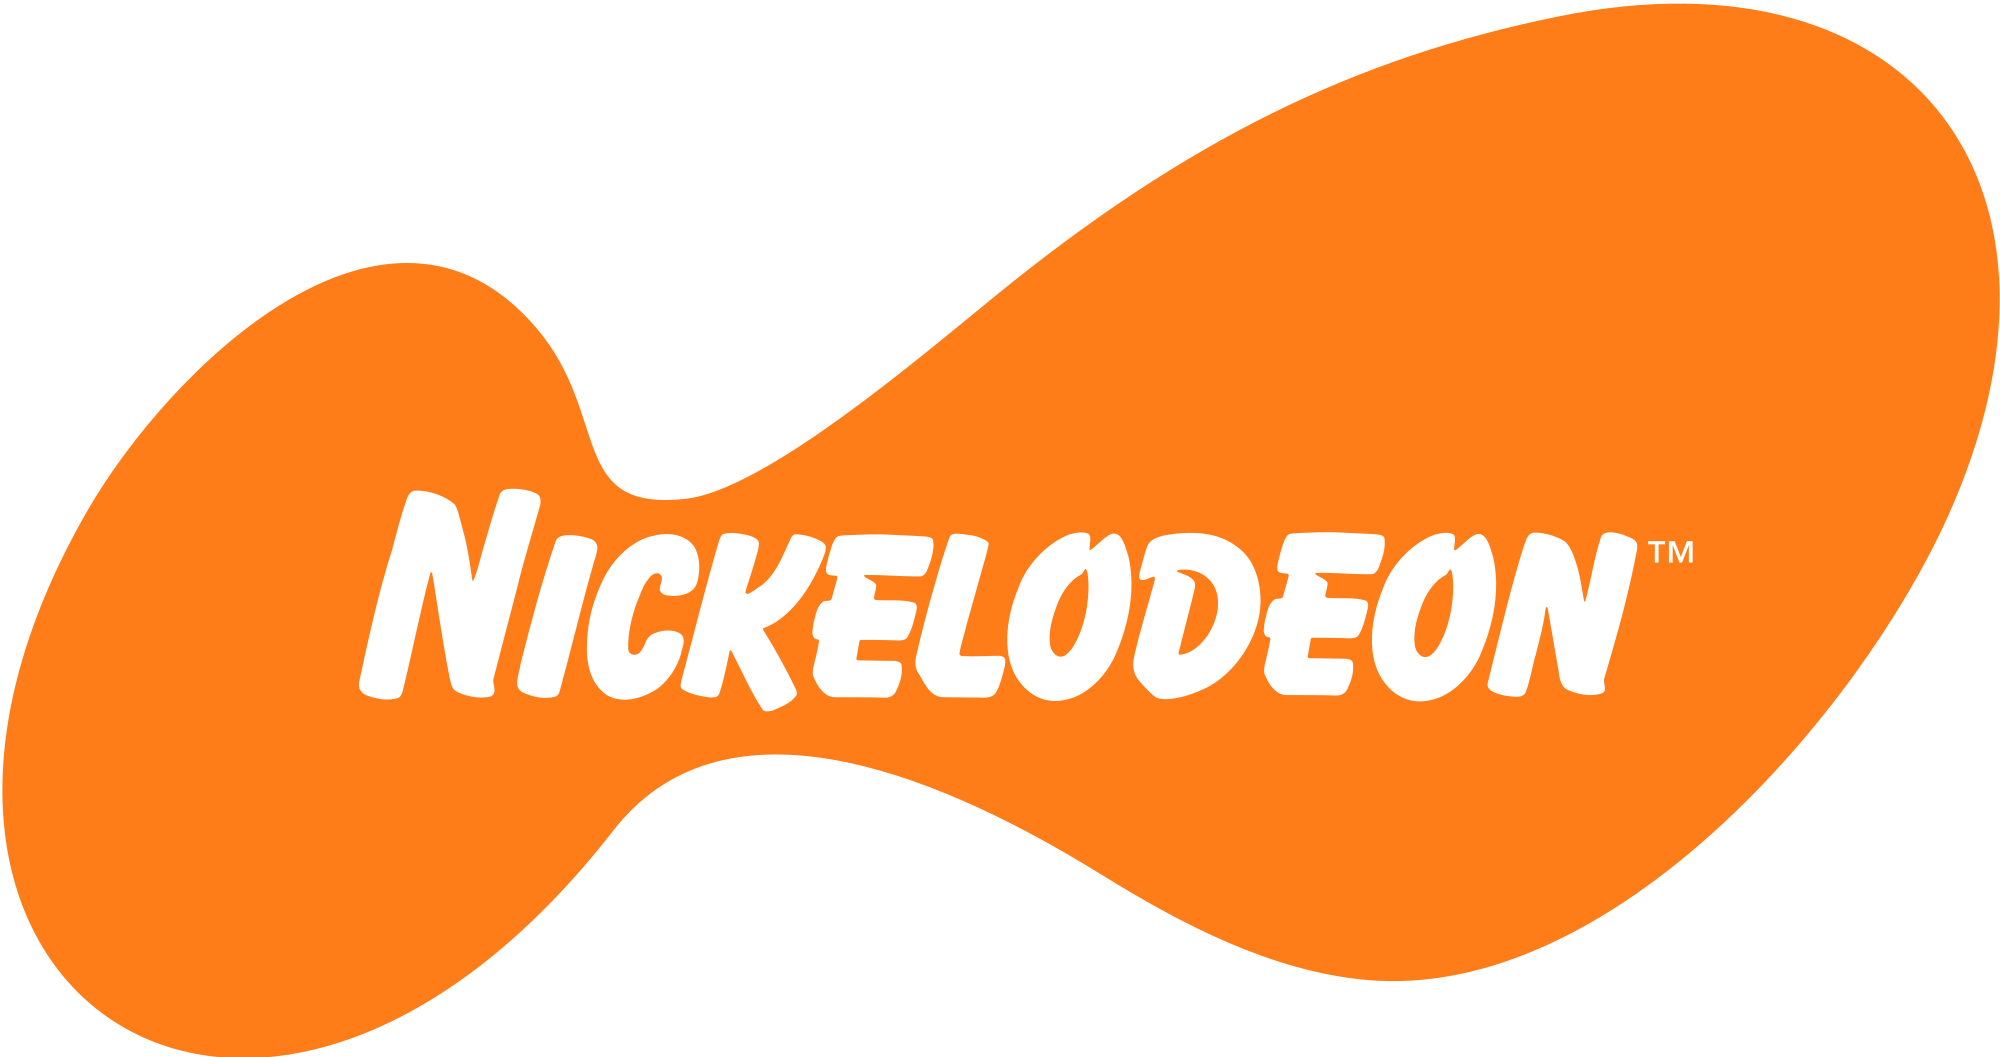 Nick channel. Телеканал Nickelodeon. Nickelodeon эмблема. Телеканал Никелодеон логотип. Надпись Nickelodeon.